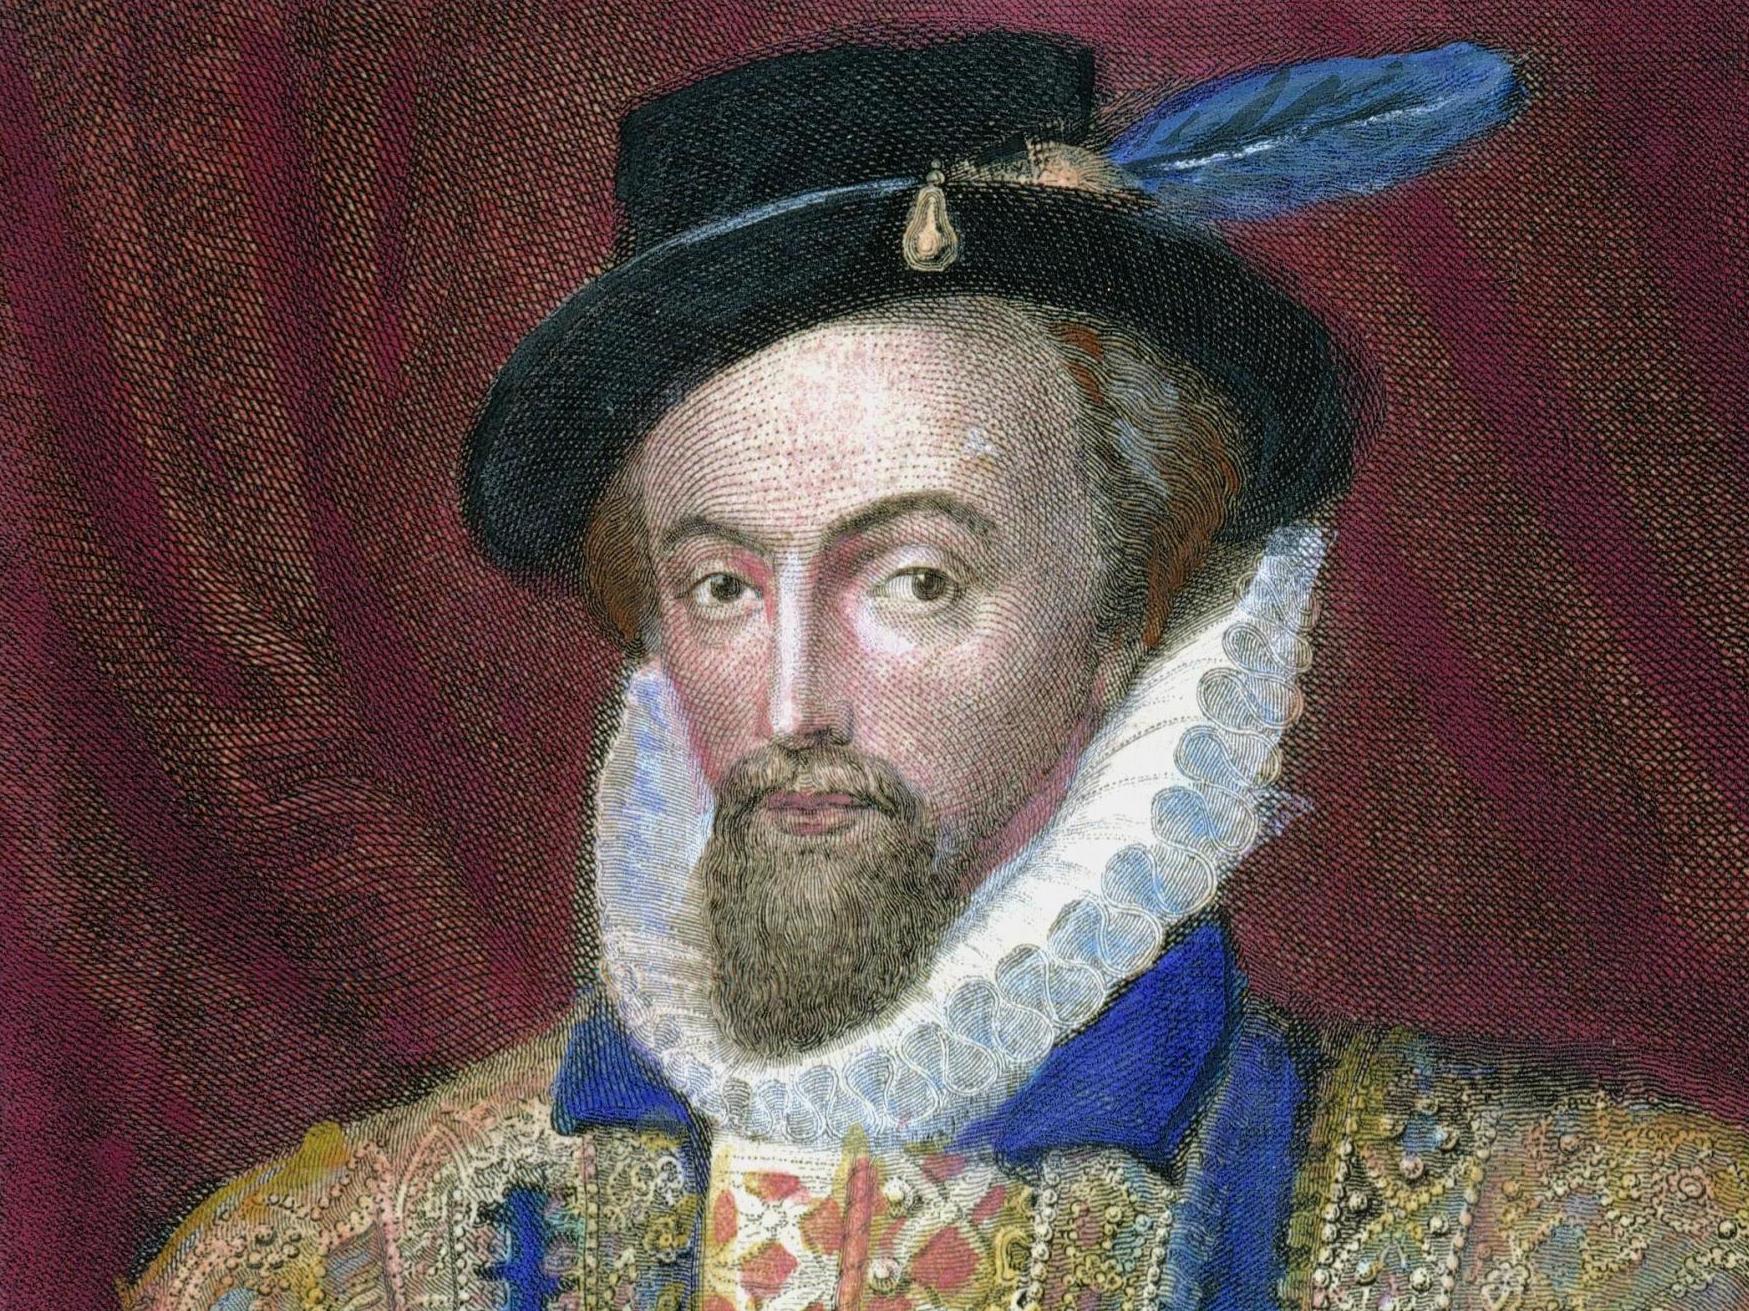 Sir Walter Raleigh photo #8570, Sir Walter Raleigh image